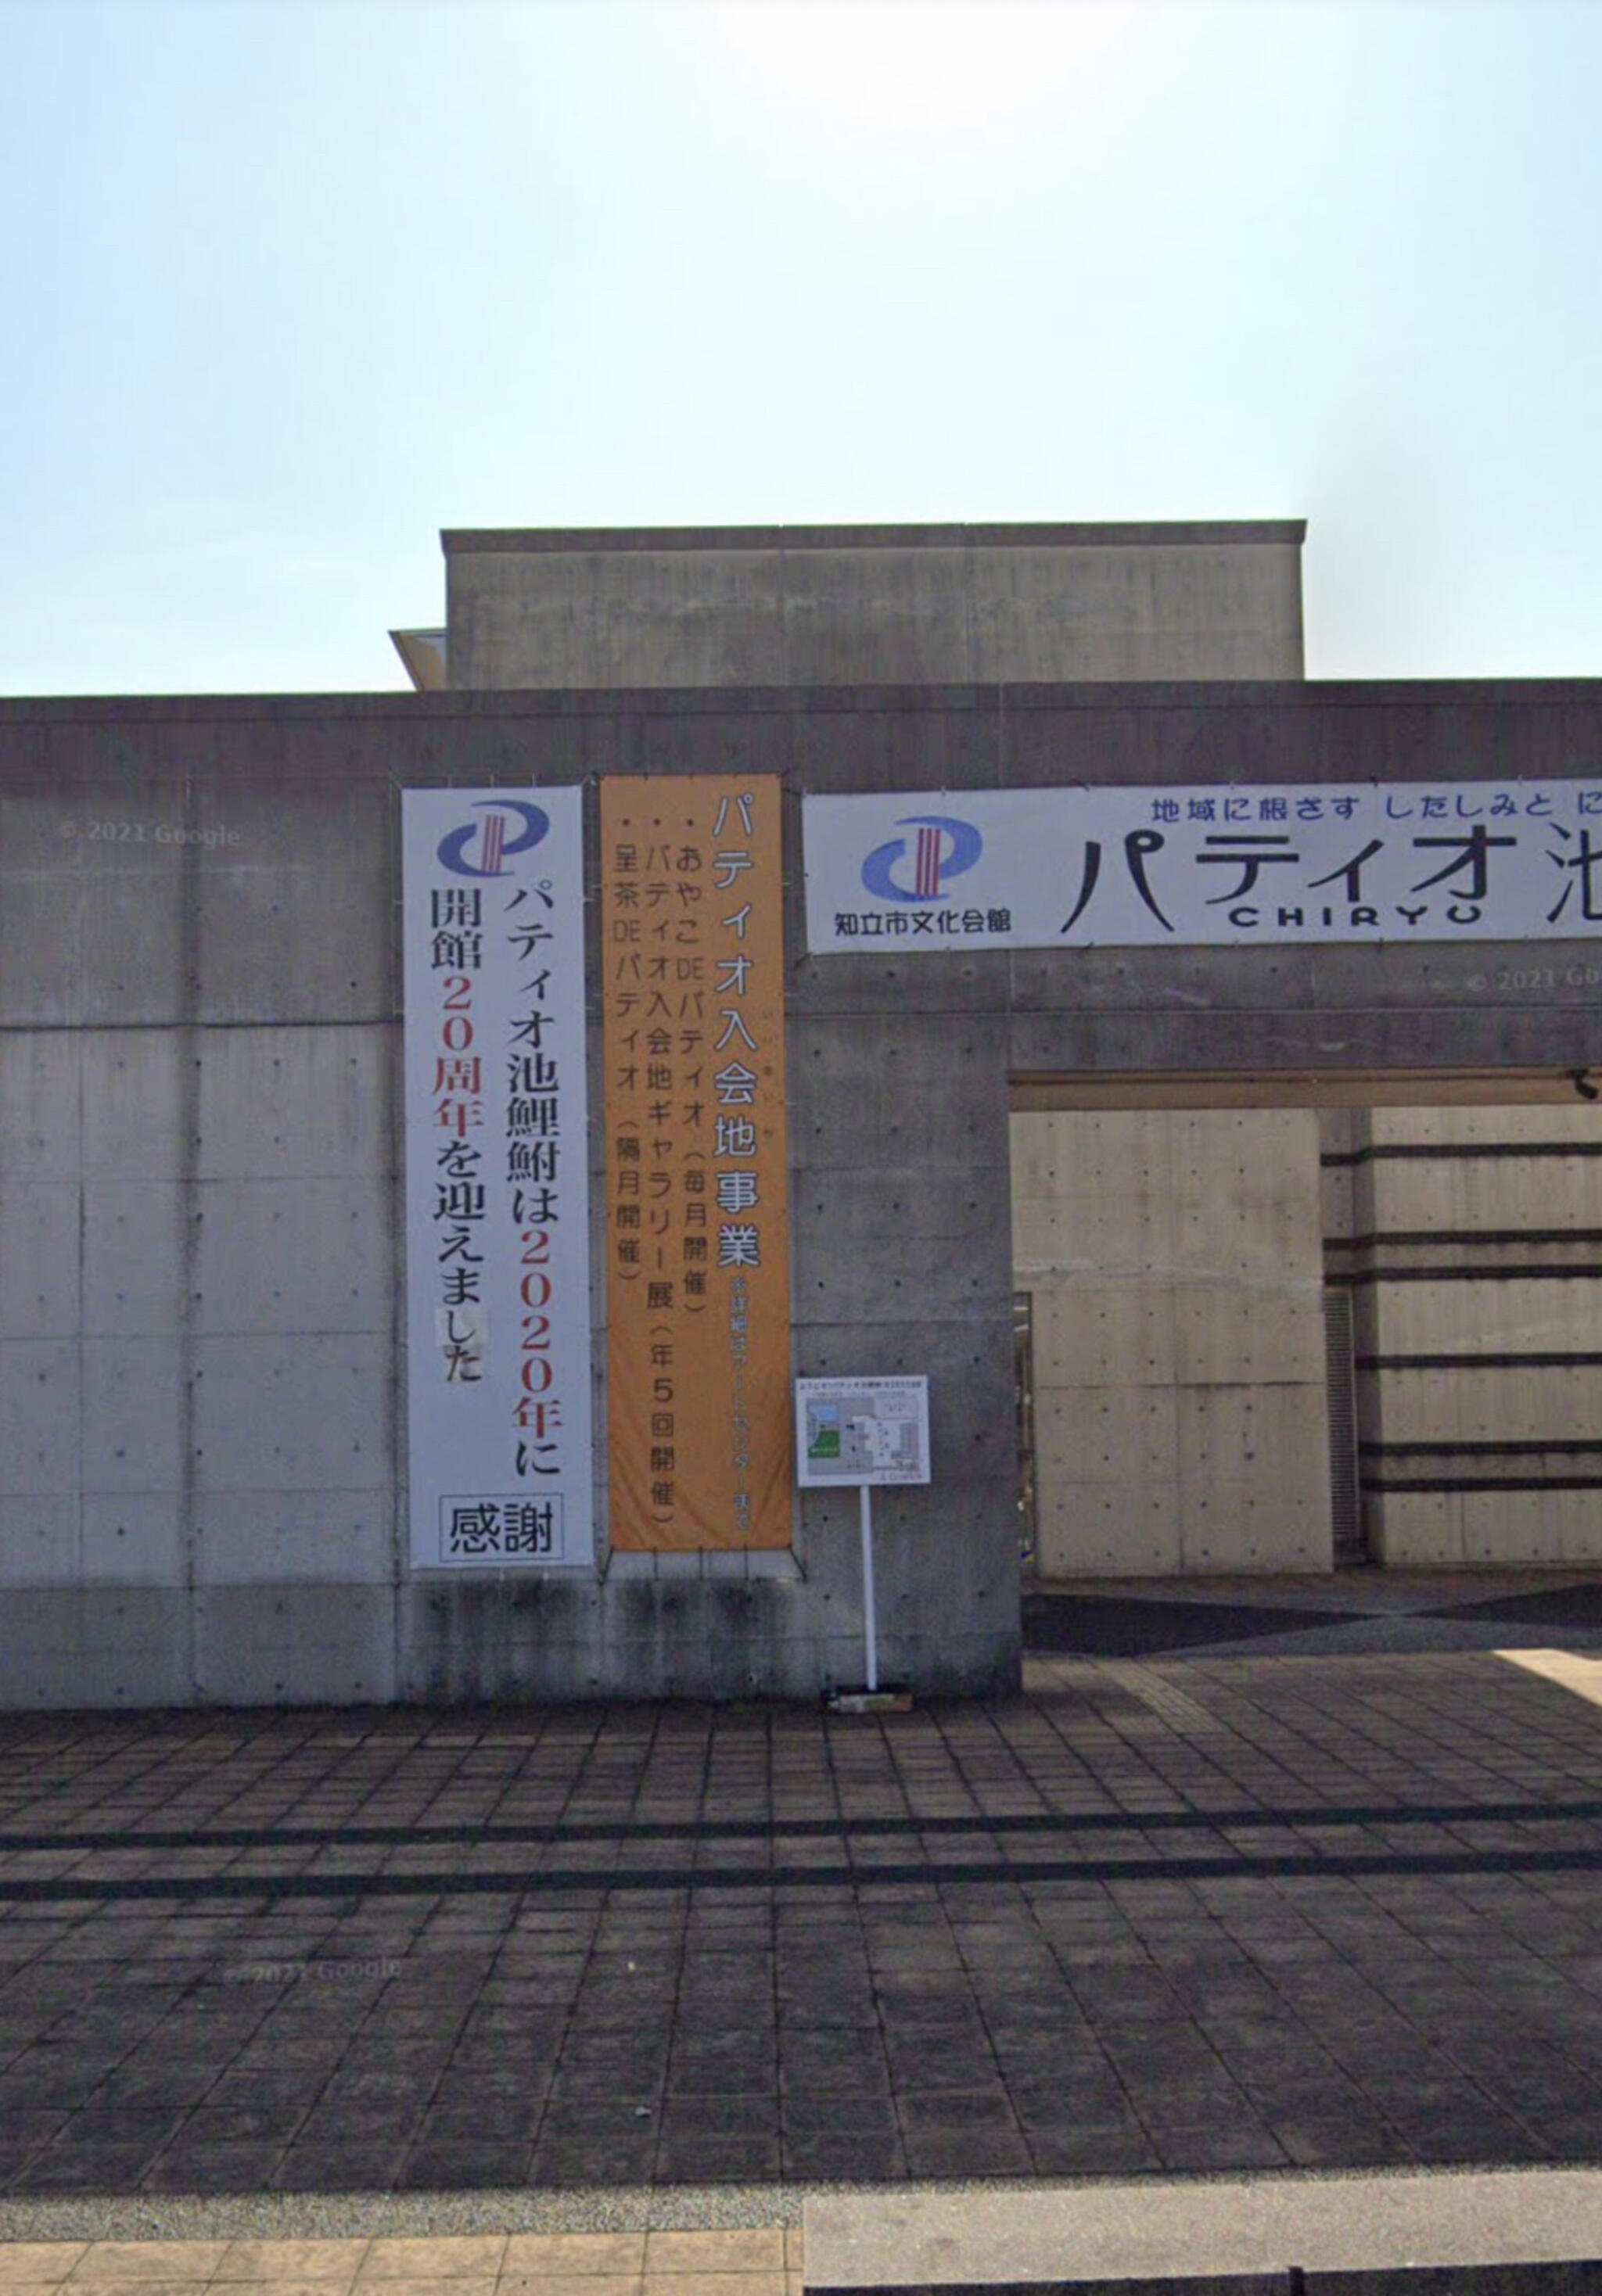 知立市文化会館(パティオ池鯉鮒)の代表写真5